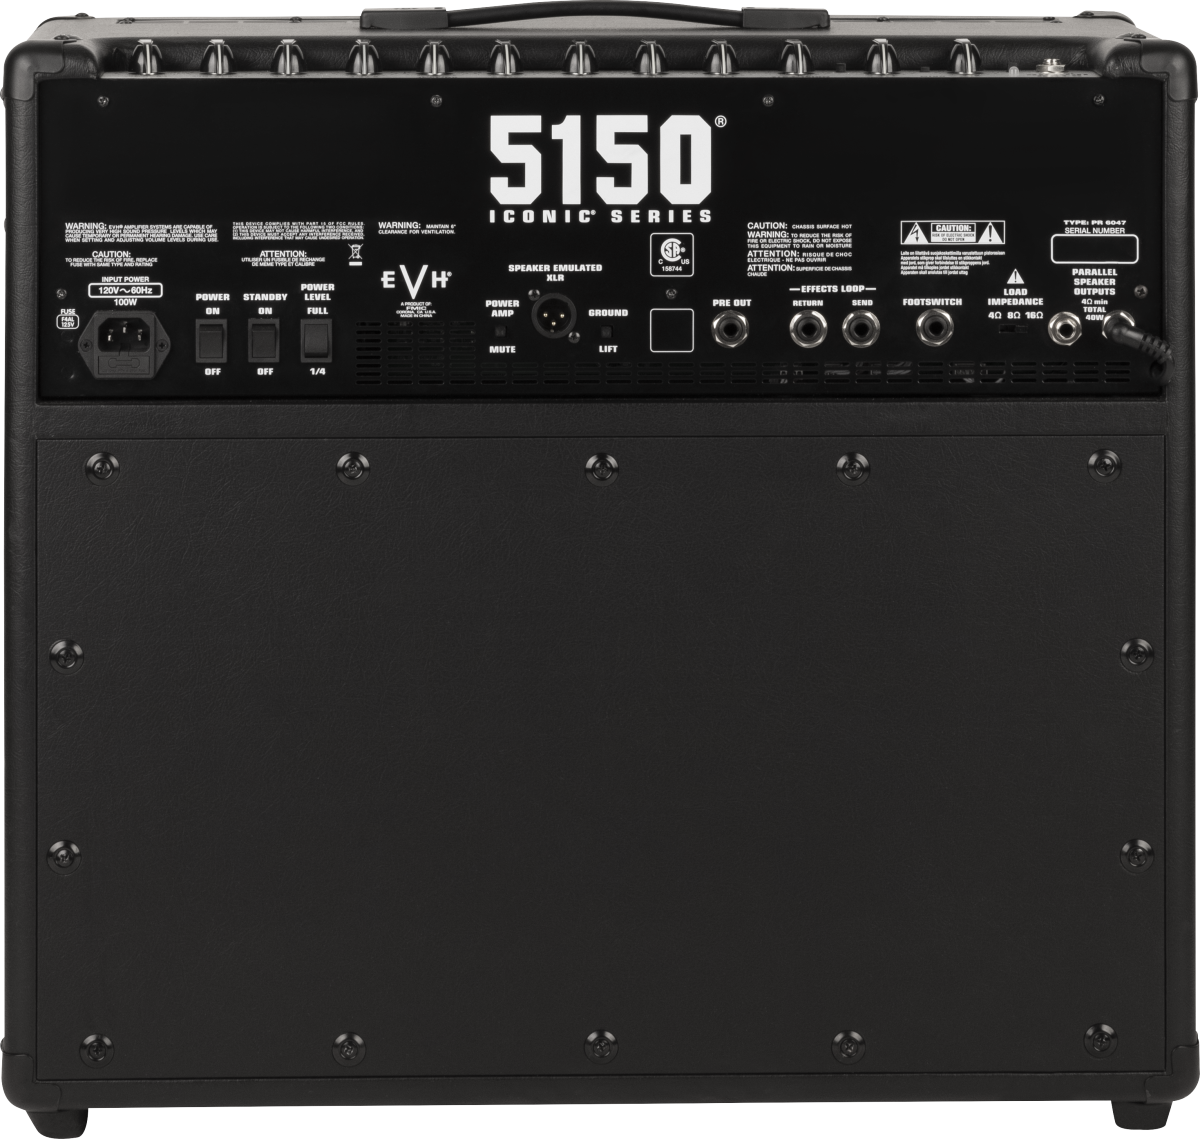 EVH 5150 Iconic Series 40W 1x12 Combo Amplifier - Black